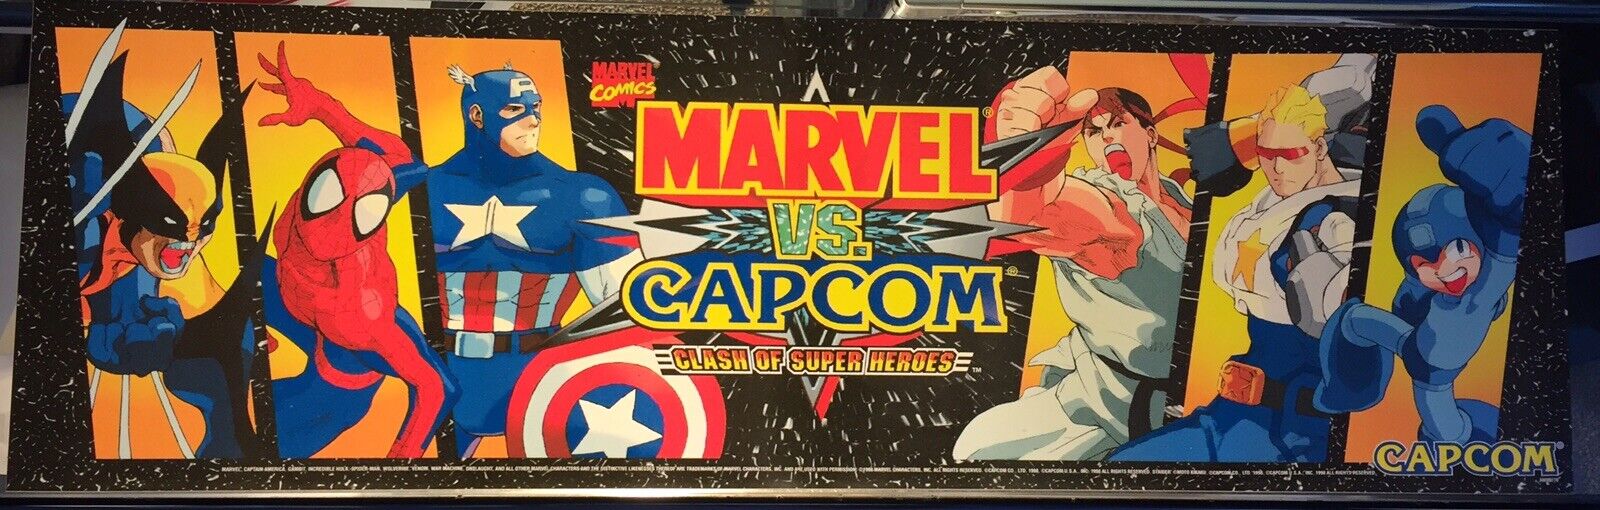 Marvel vs Capcom Arcade Marquee 26\